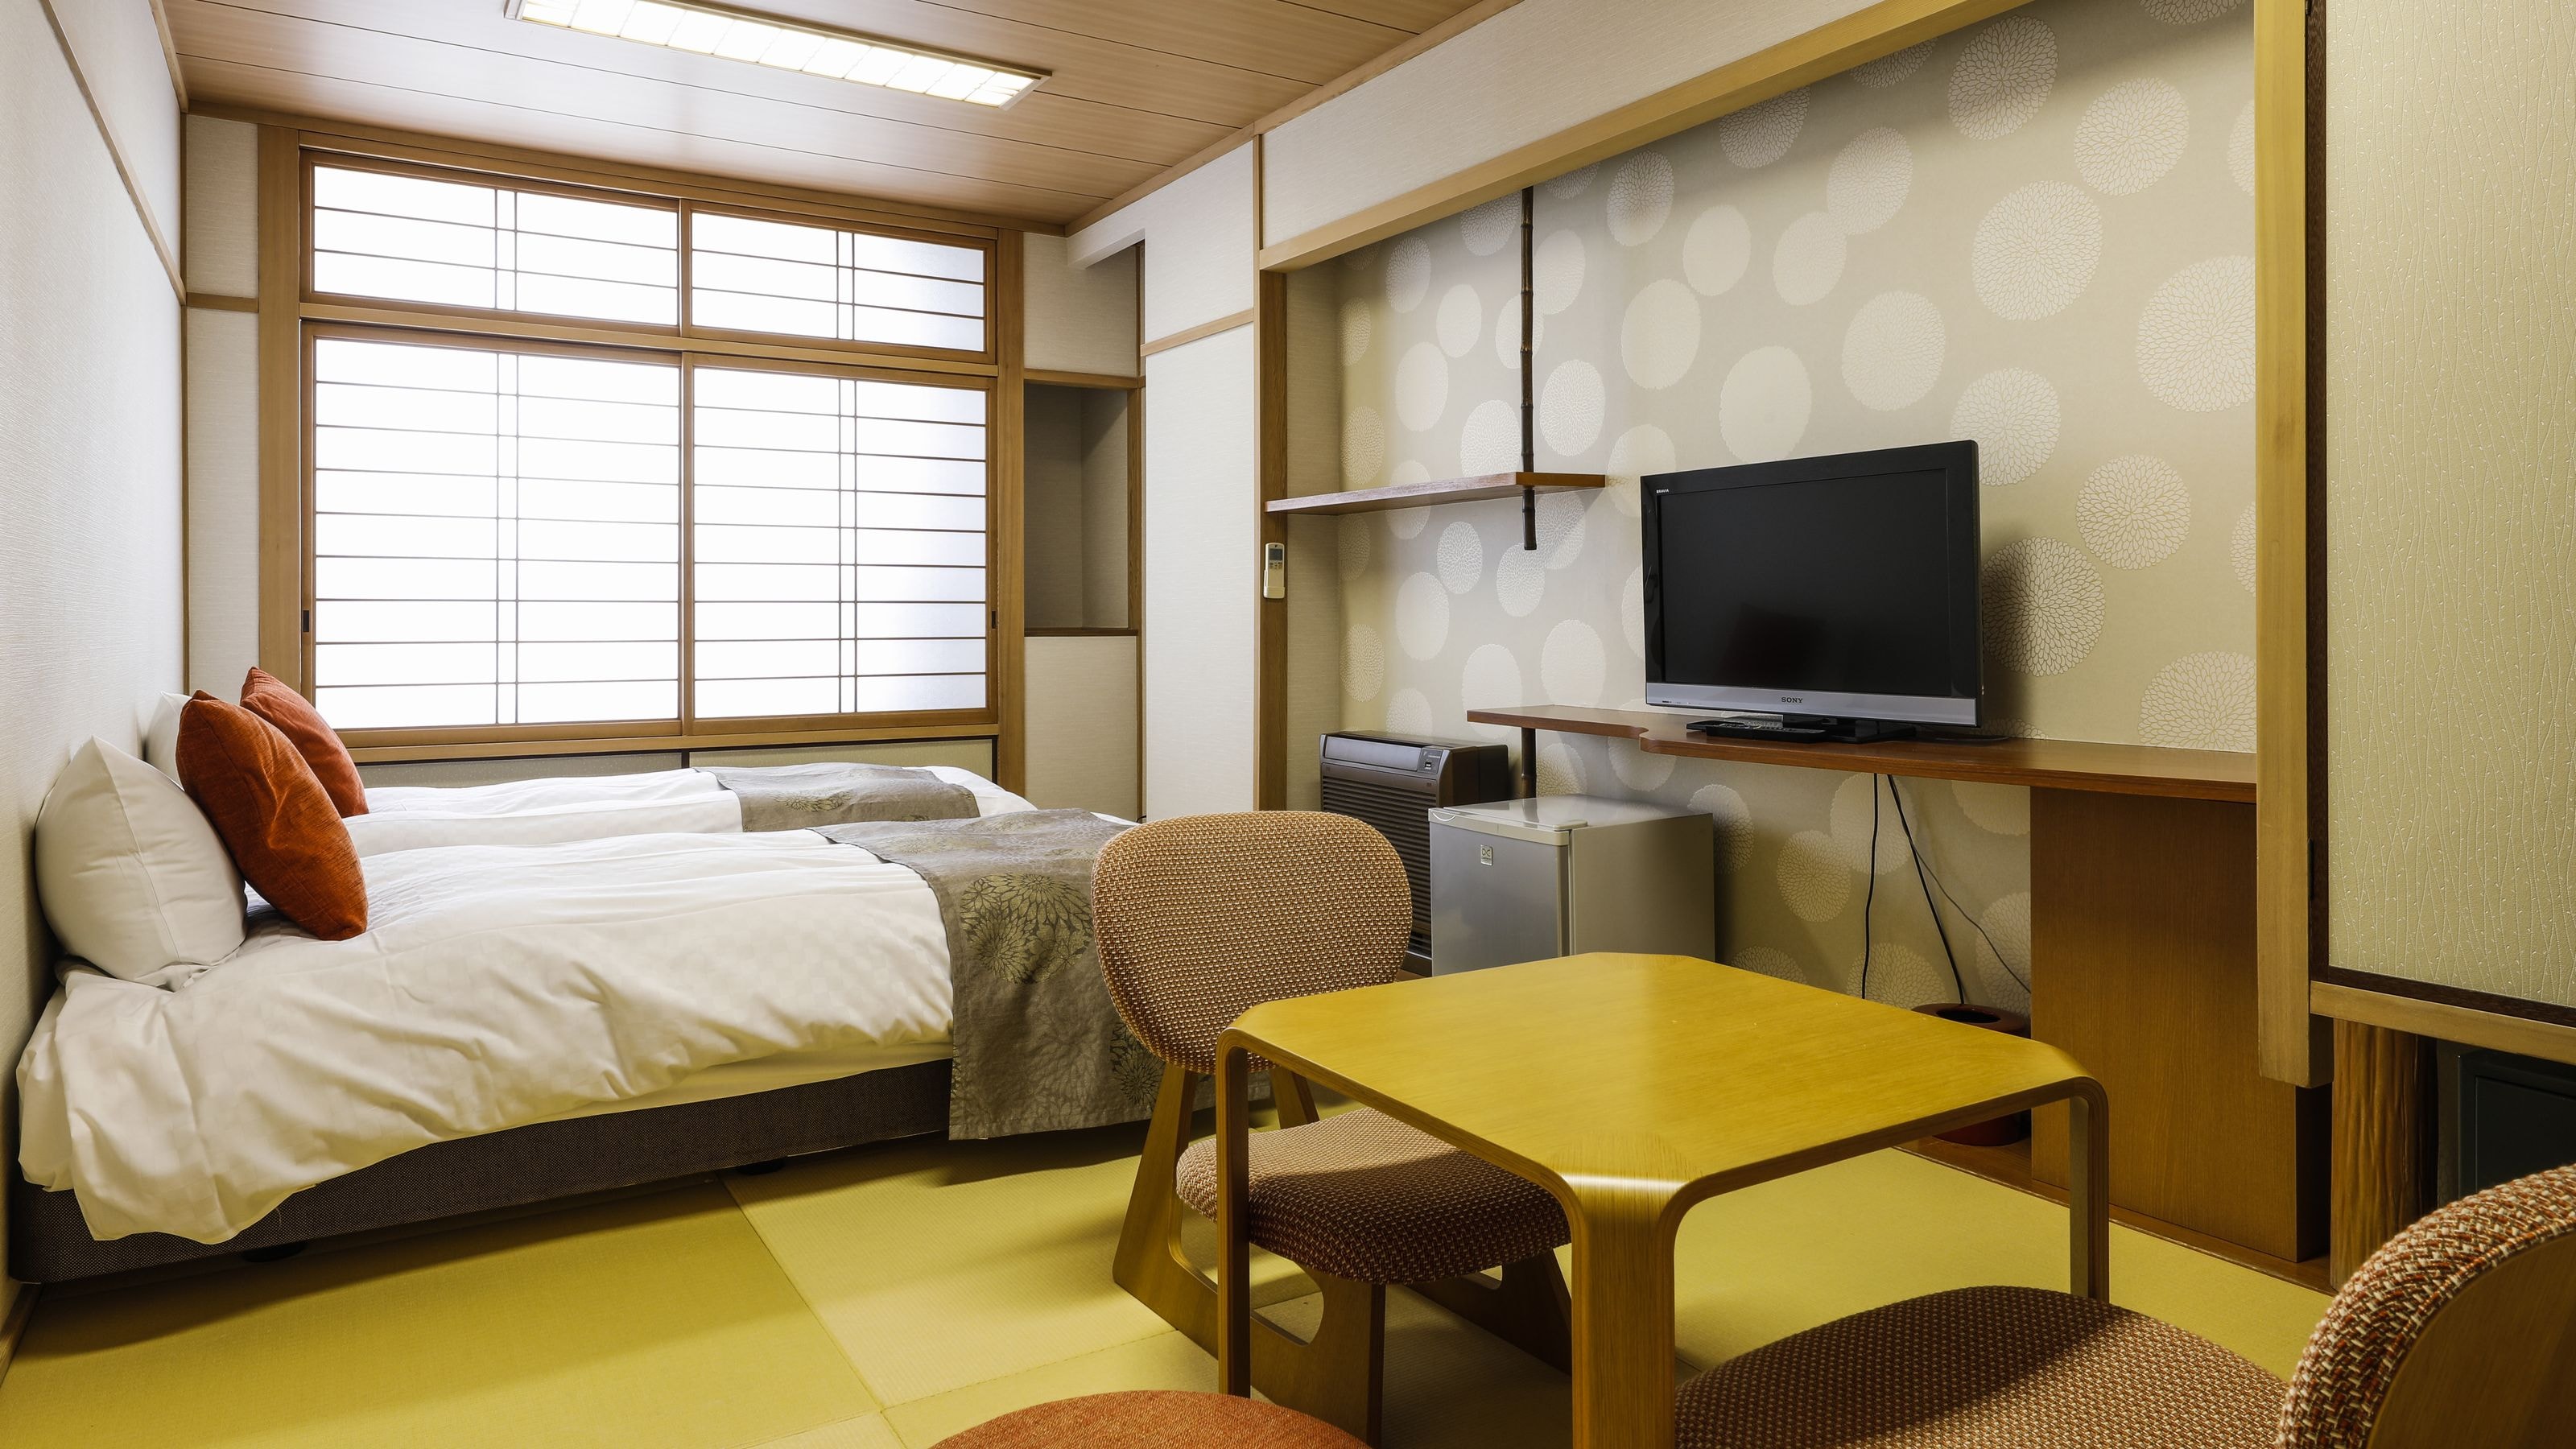 * Contoh modern Jepang: Tersedia tempat tidur Twin Simmons.